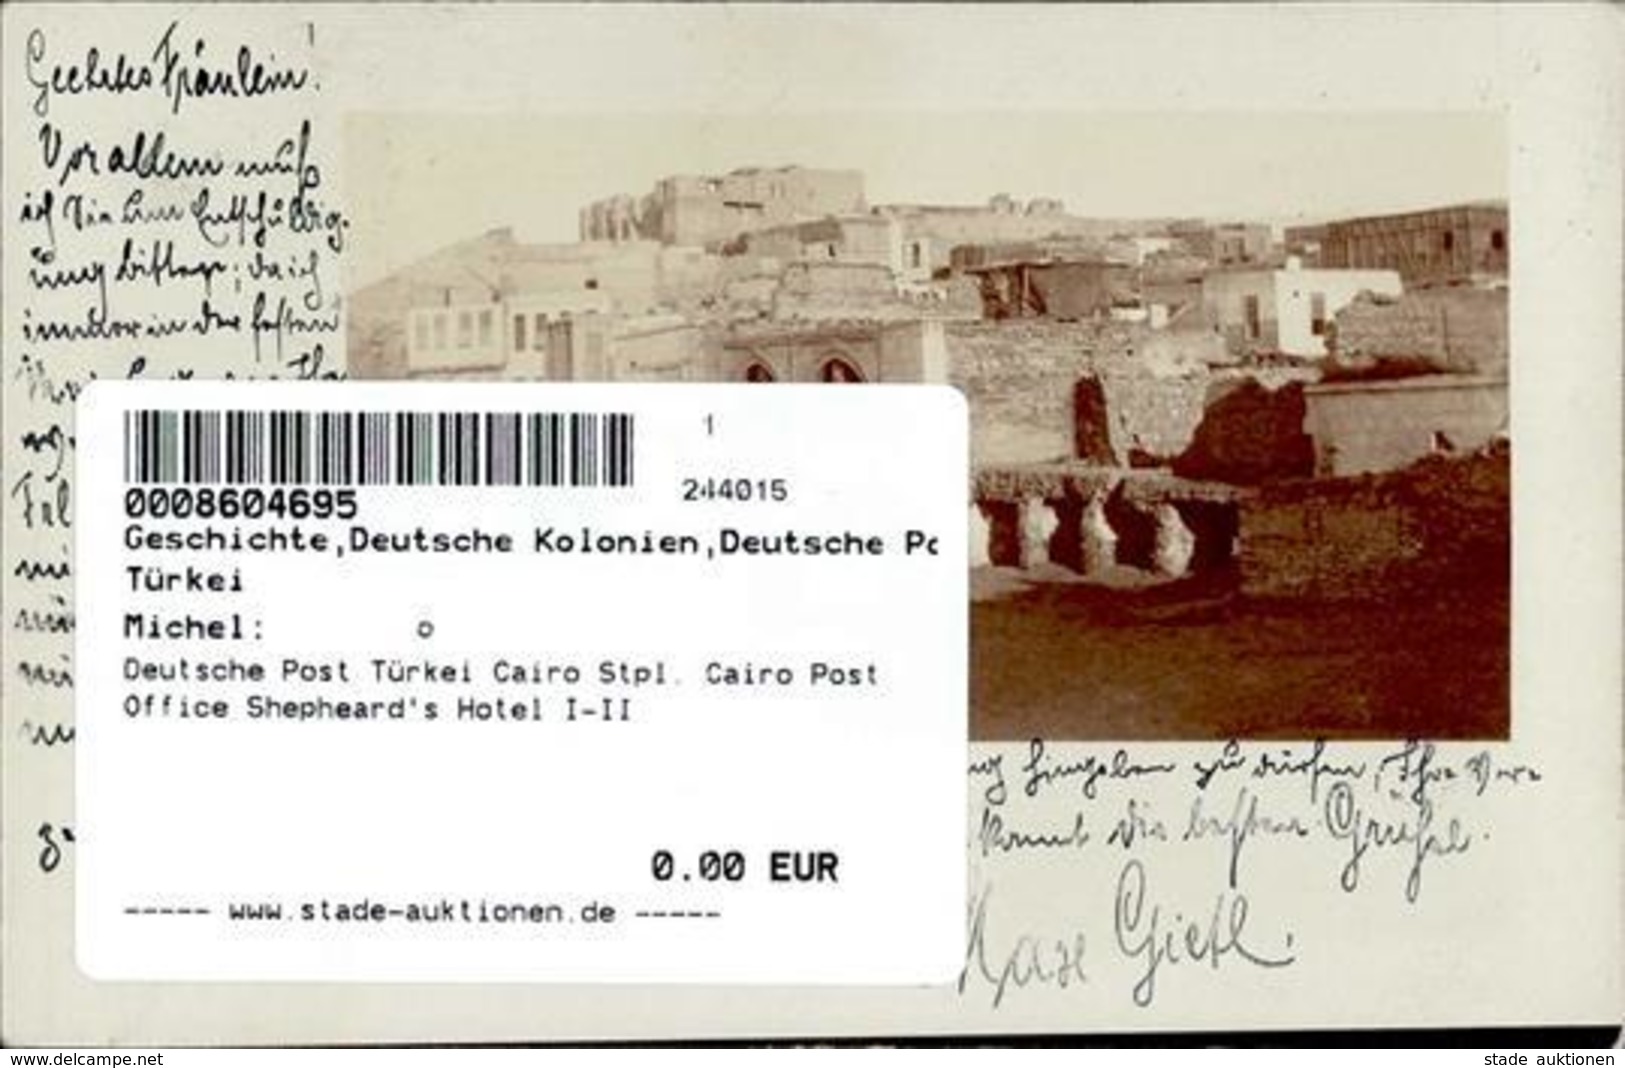 Deutsche Post Türkei Cairo Stpl. Cairo Post Office Shepheard's Hotel I-II - History